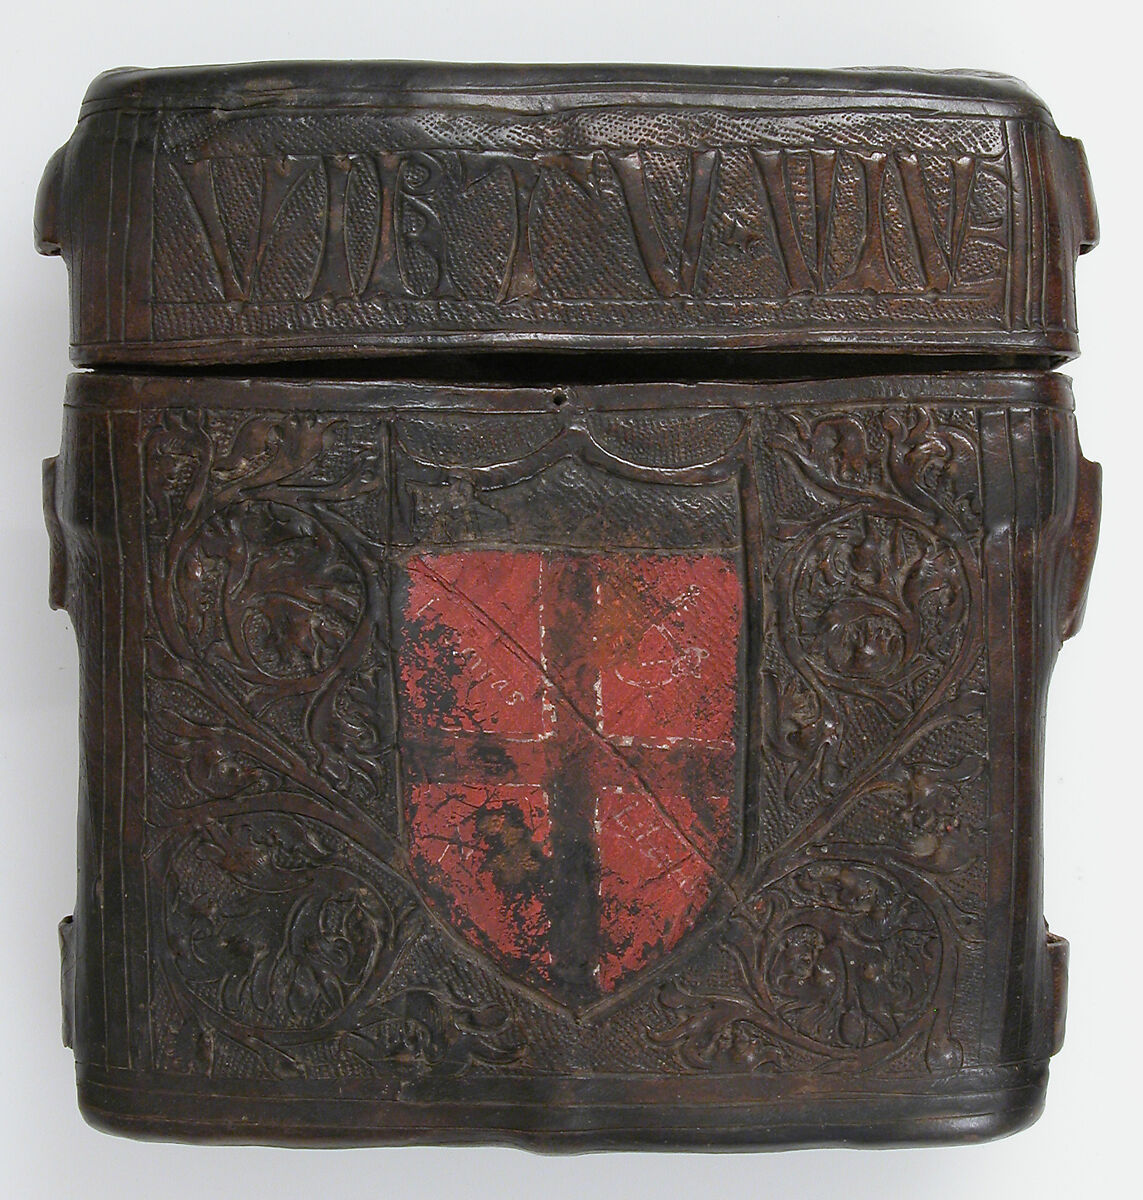 Book Box, Cuir bouilli (tooled leather), polychromy, Italian 